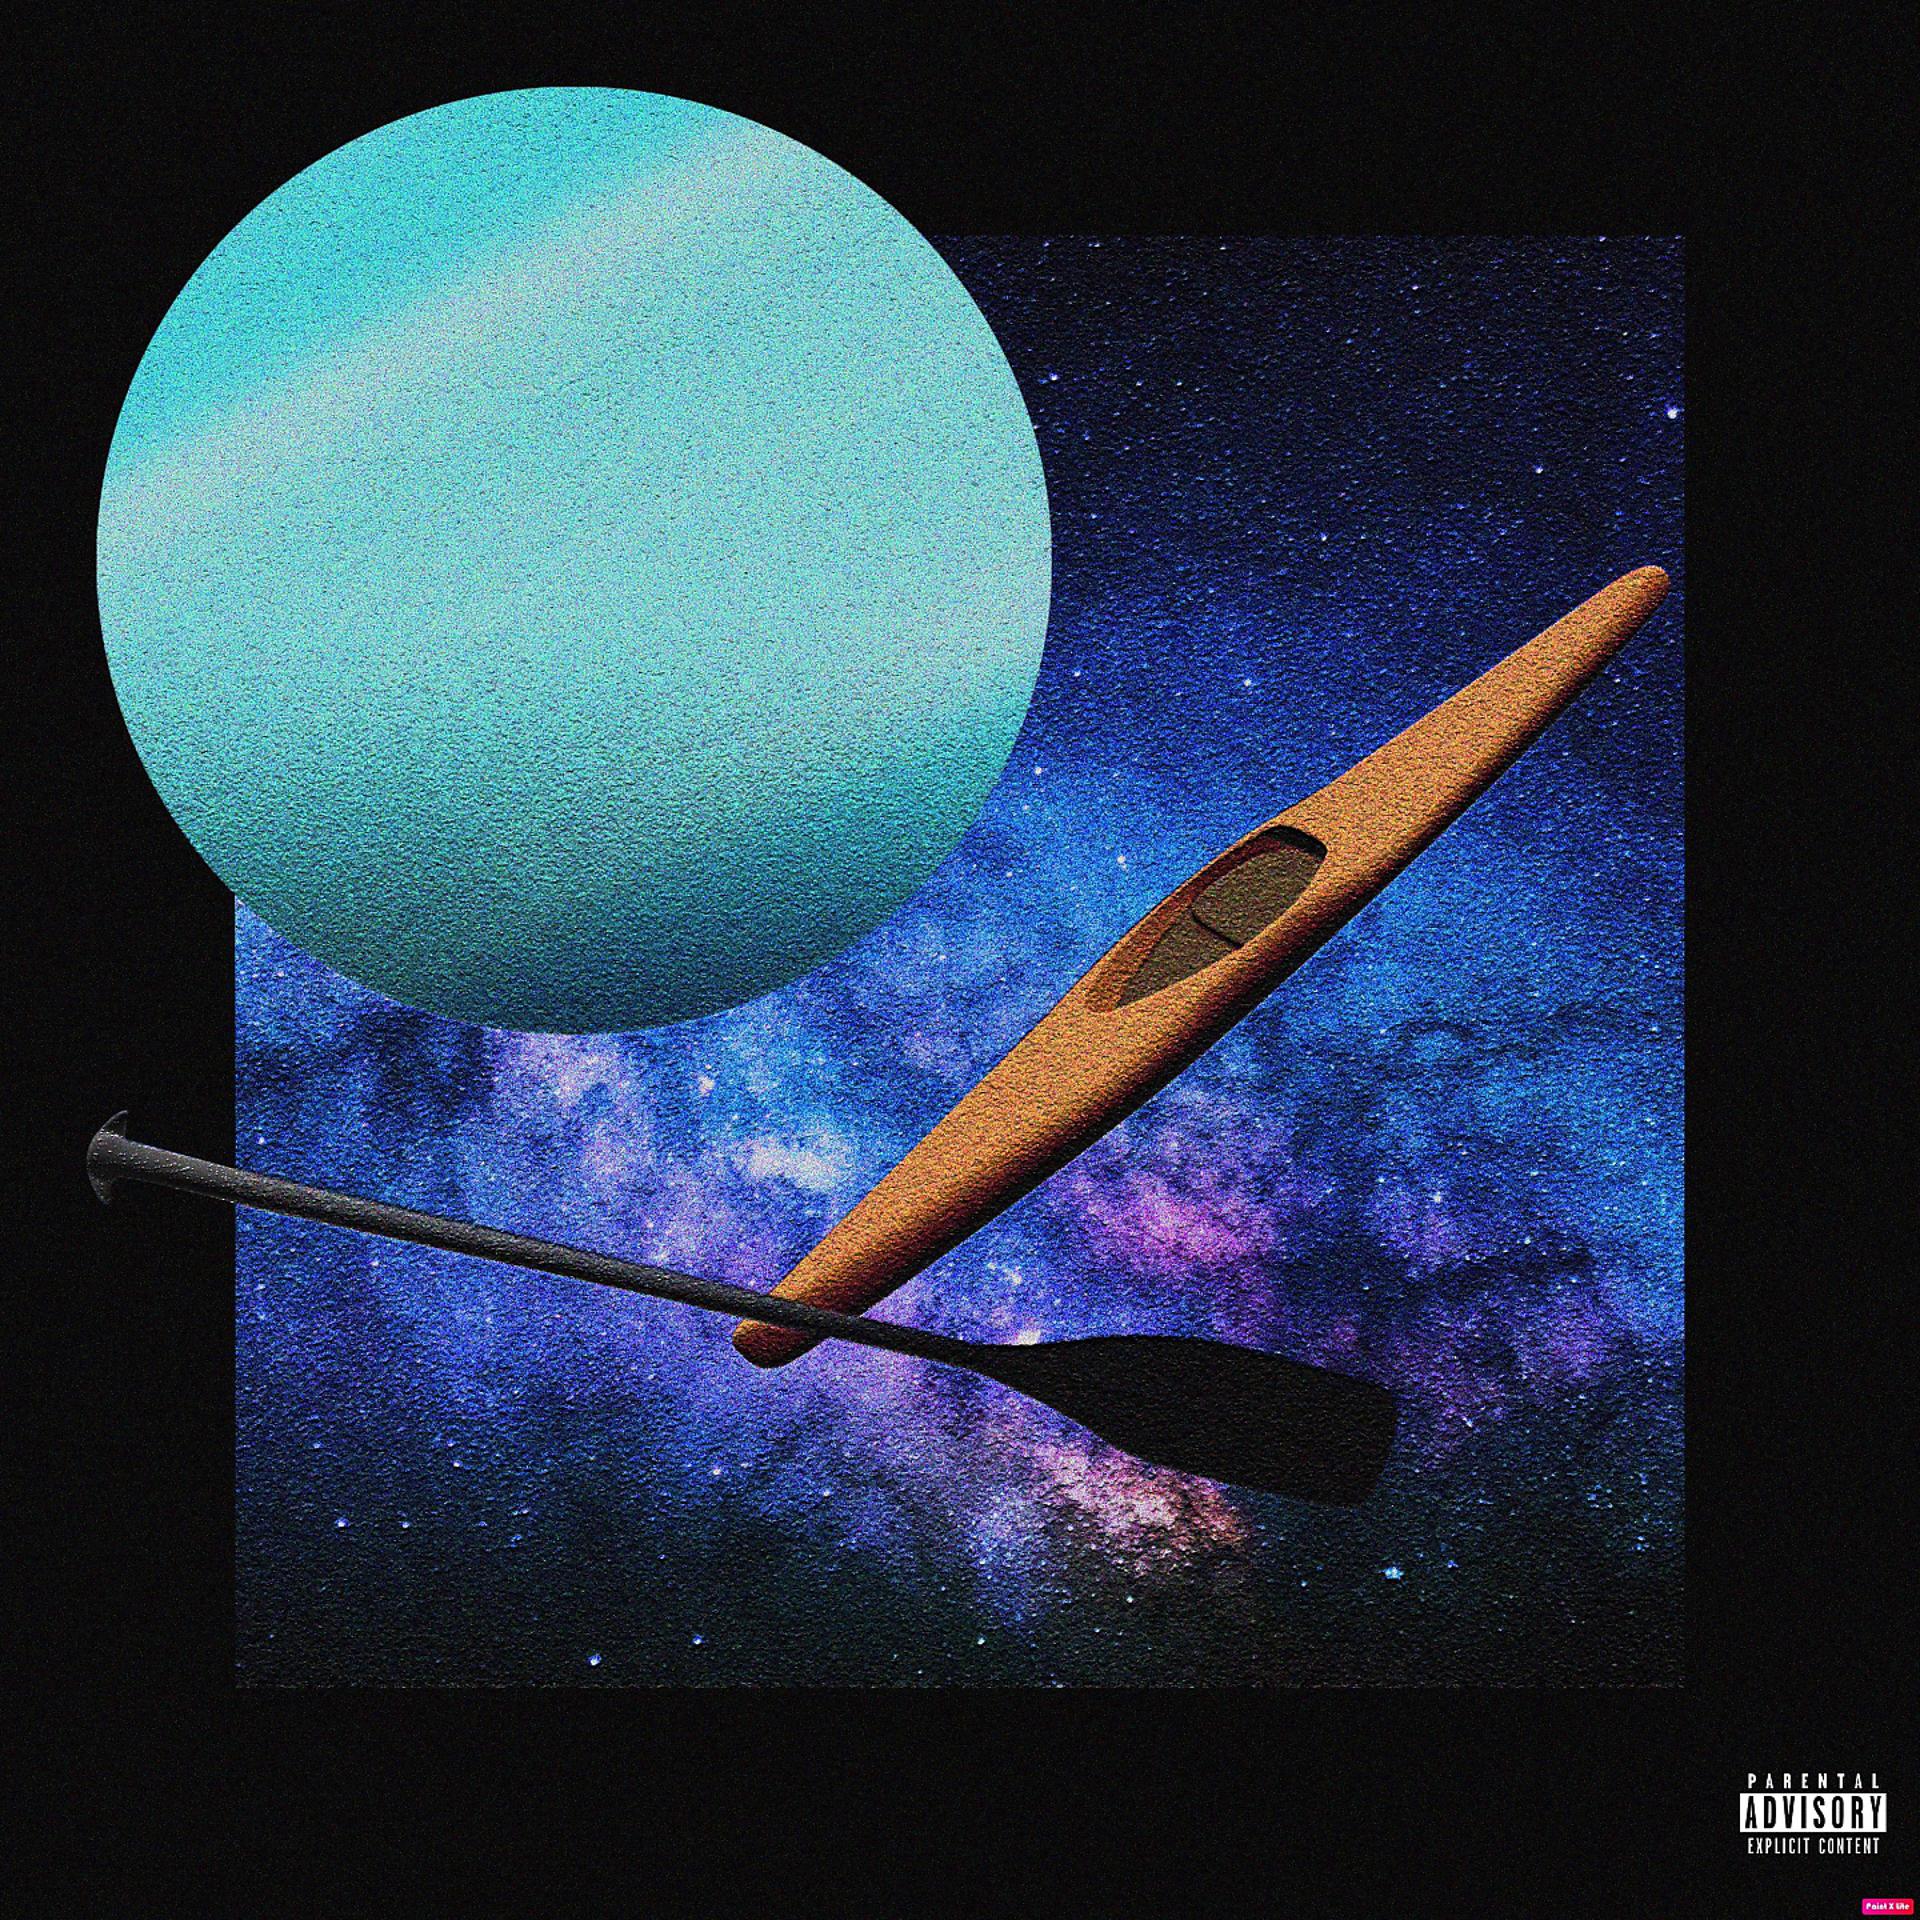 Постер альбома Urano